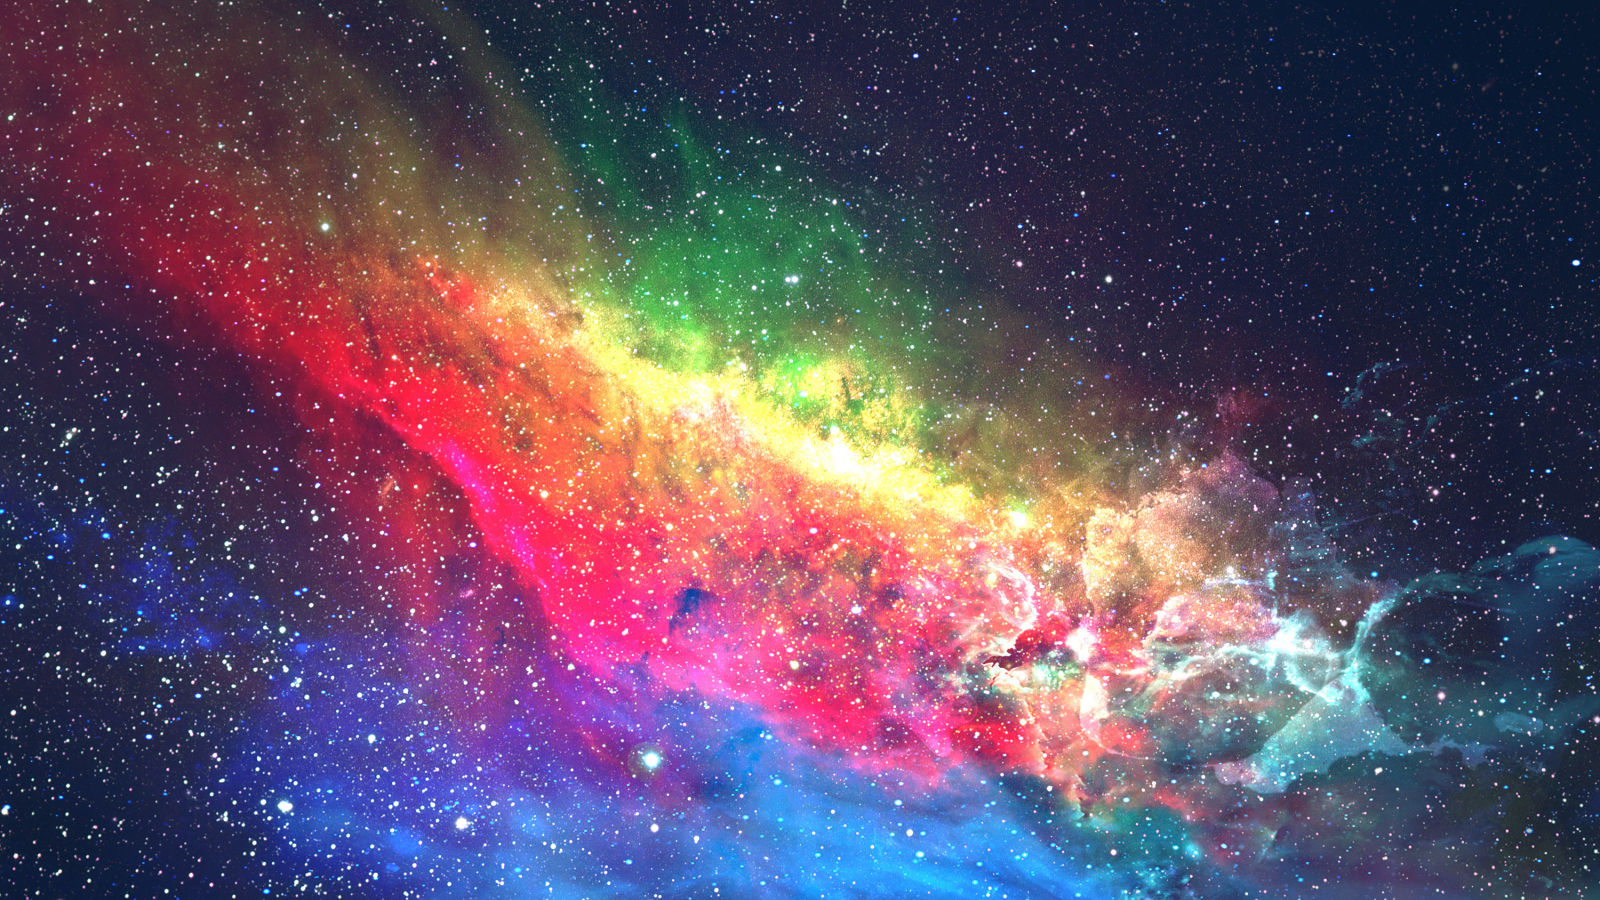 Download wallpaper 1600x900 colorful, galaxy, space, digital art, 16:9